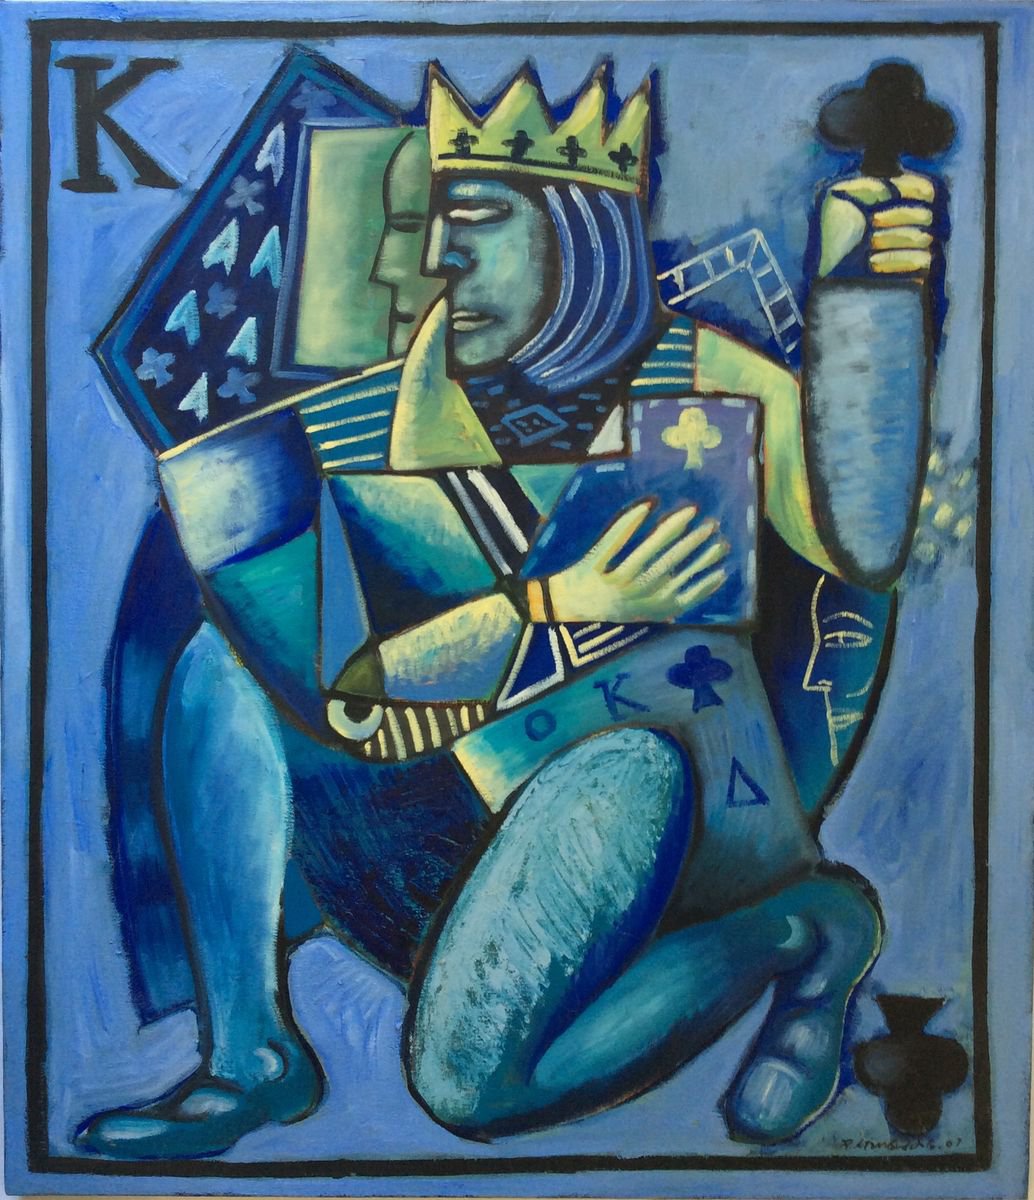 The Blue King by Roberto Munguia Garcia